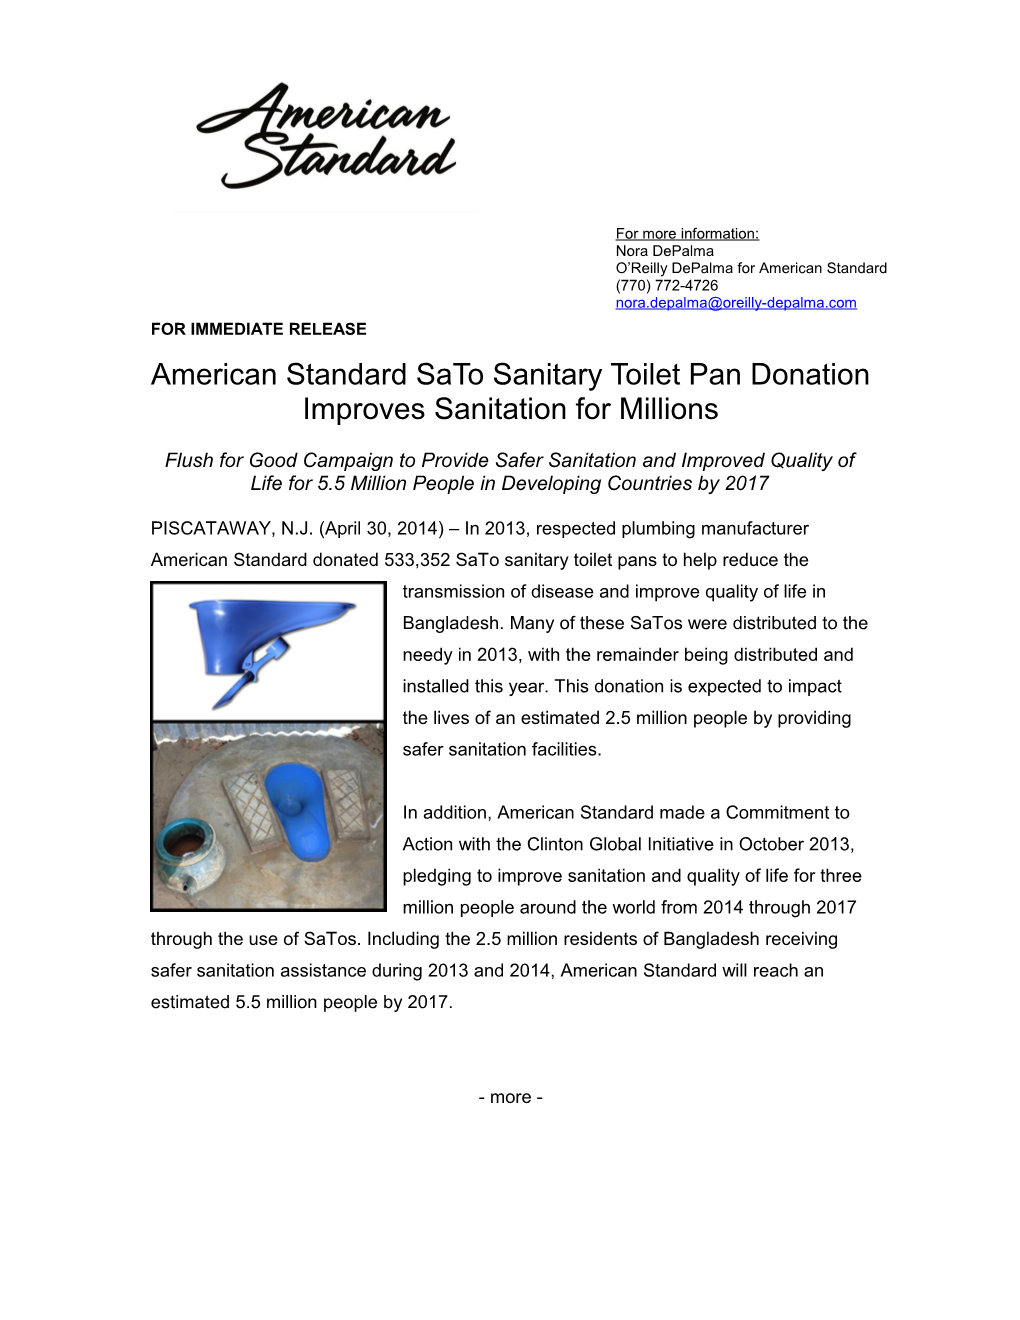 American Standard Sato Sanitary Toilet Pan Donation Improves Sanitation for Millions3-3-3